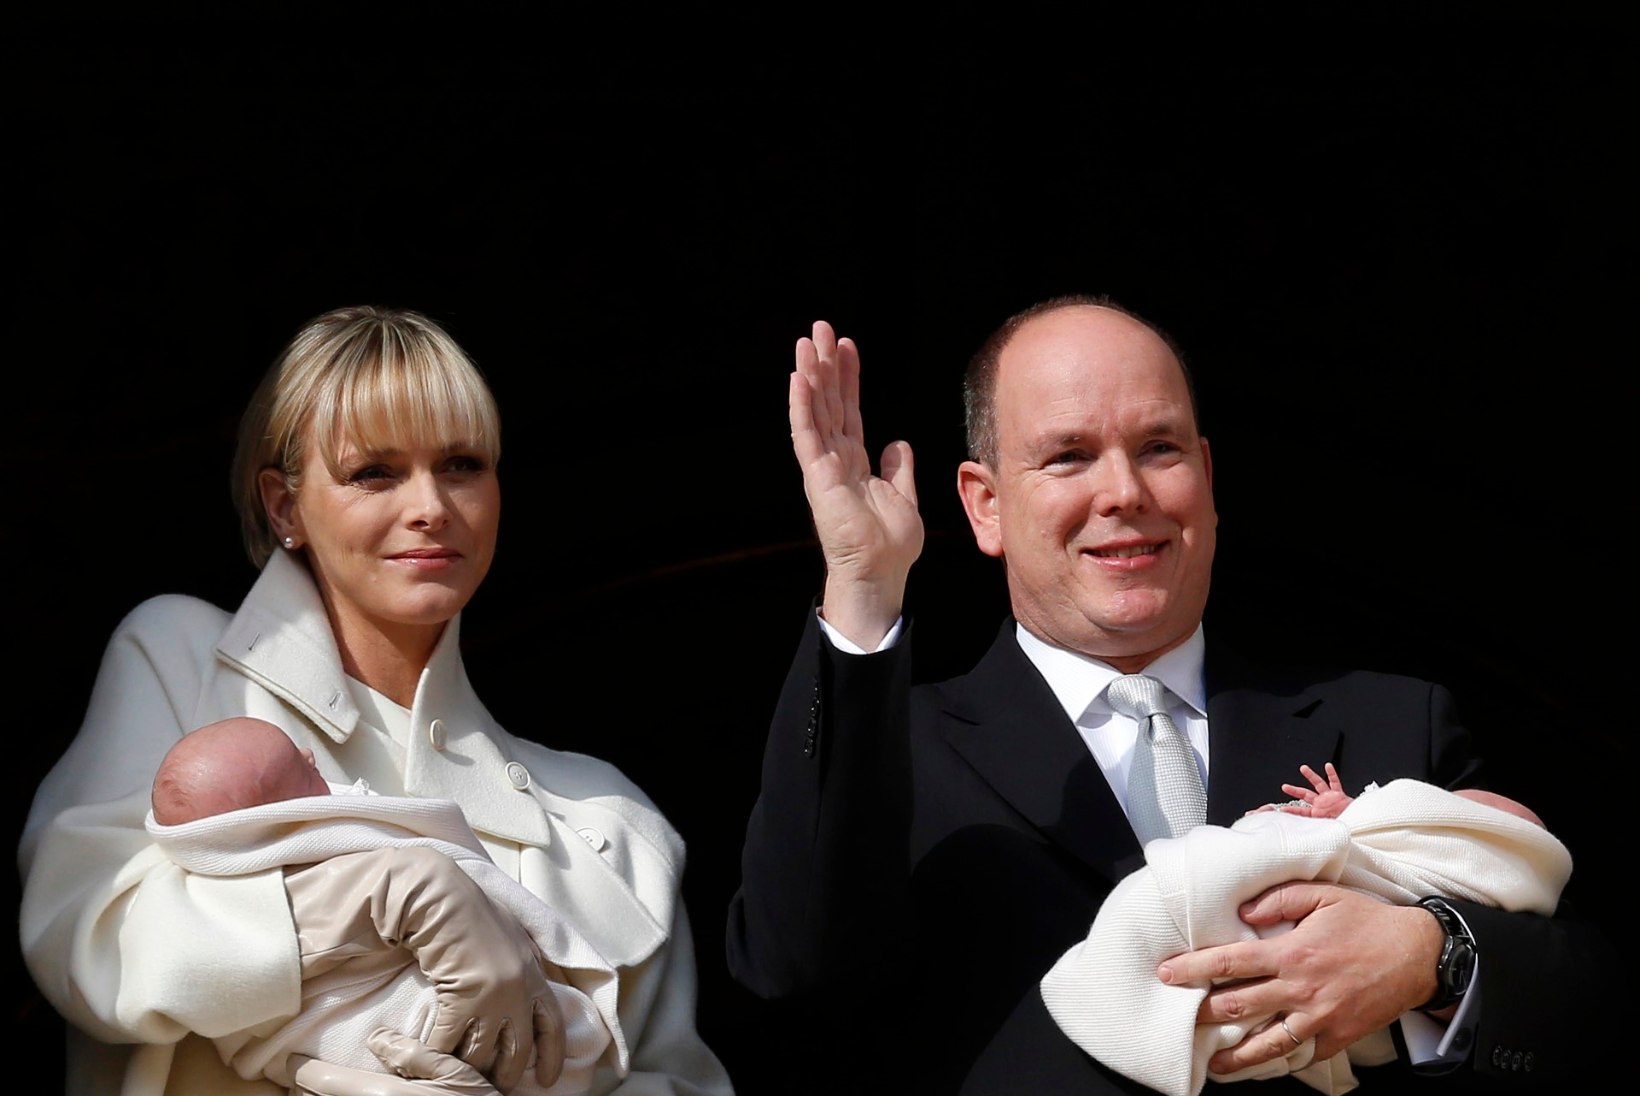 Monaco vürstipere ristib kaksikuid